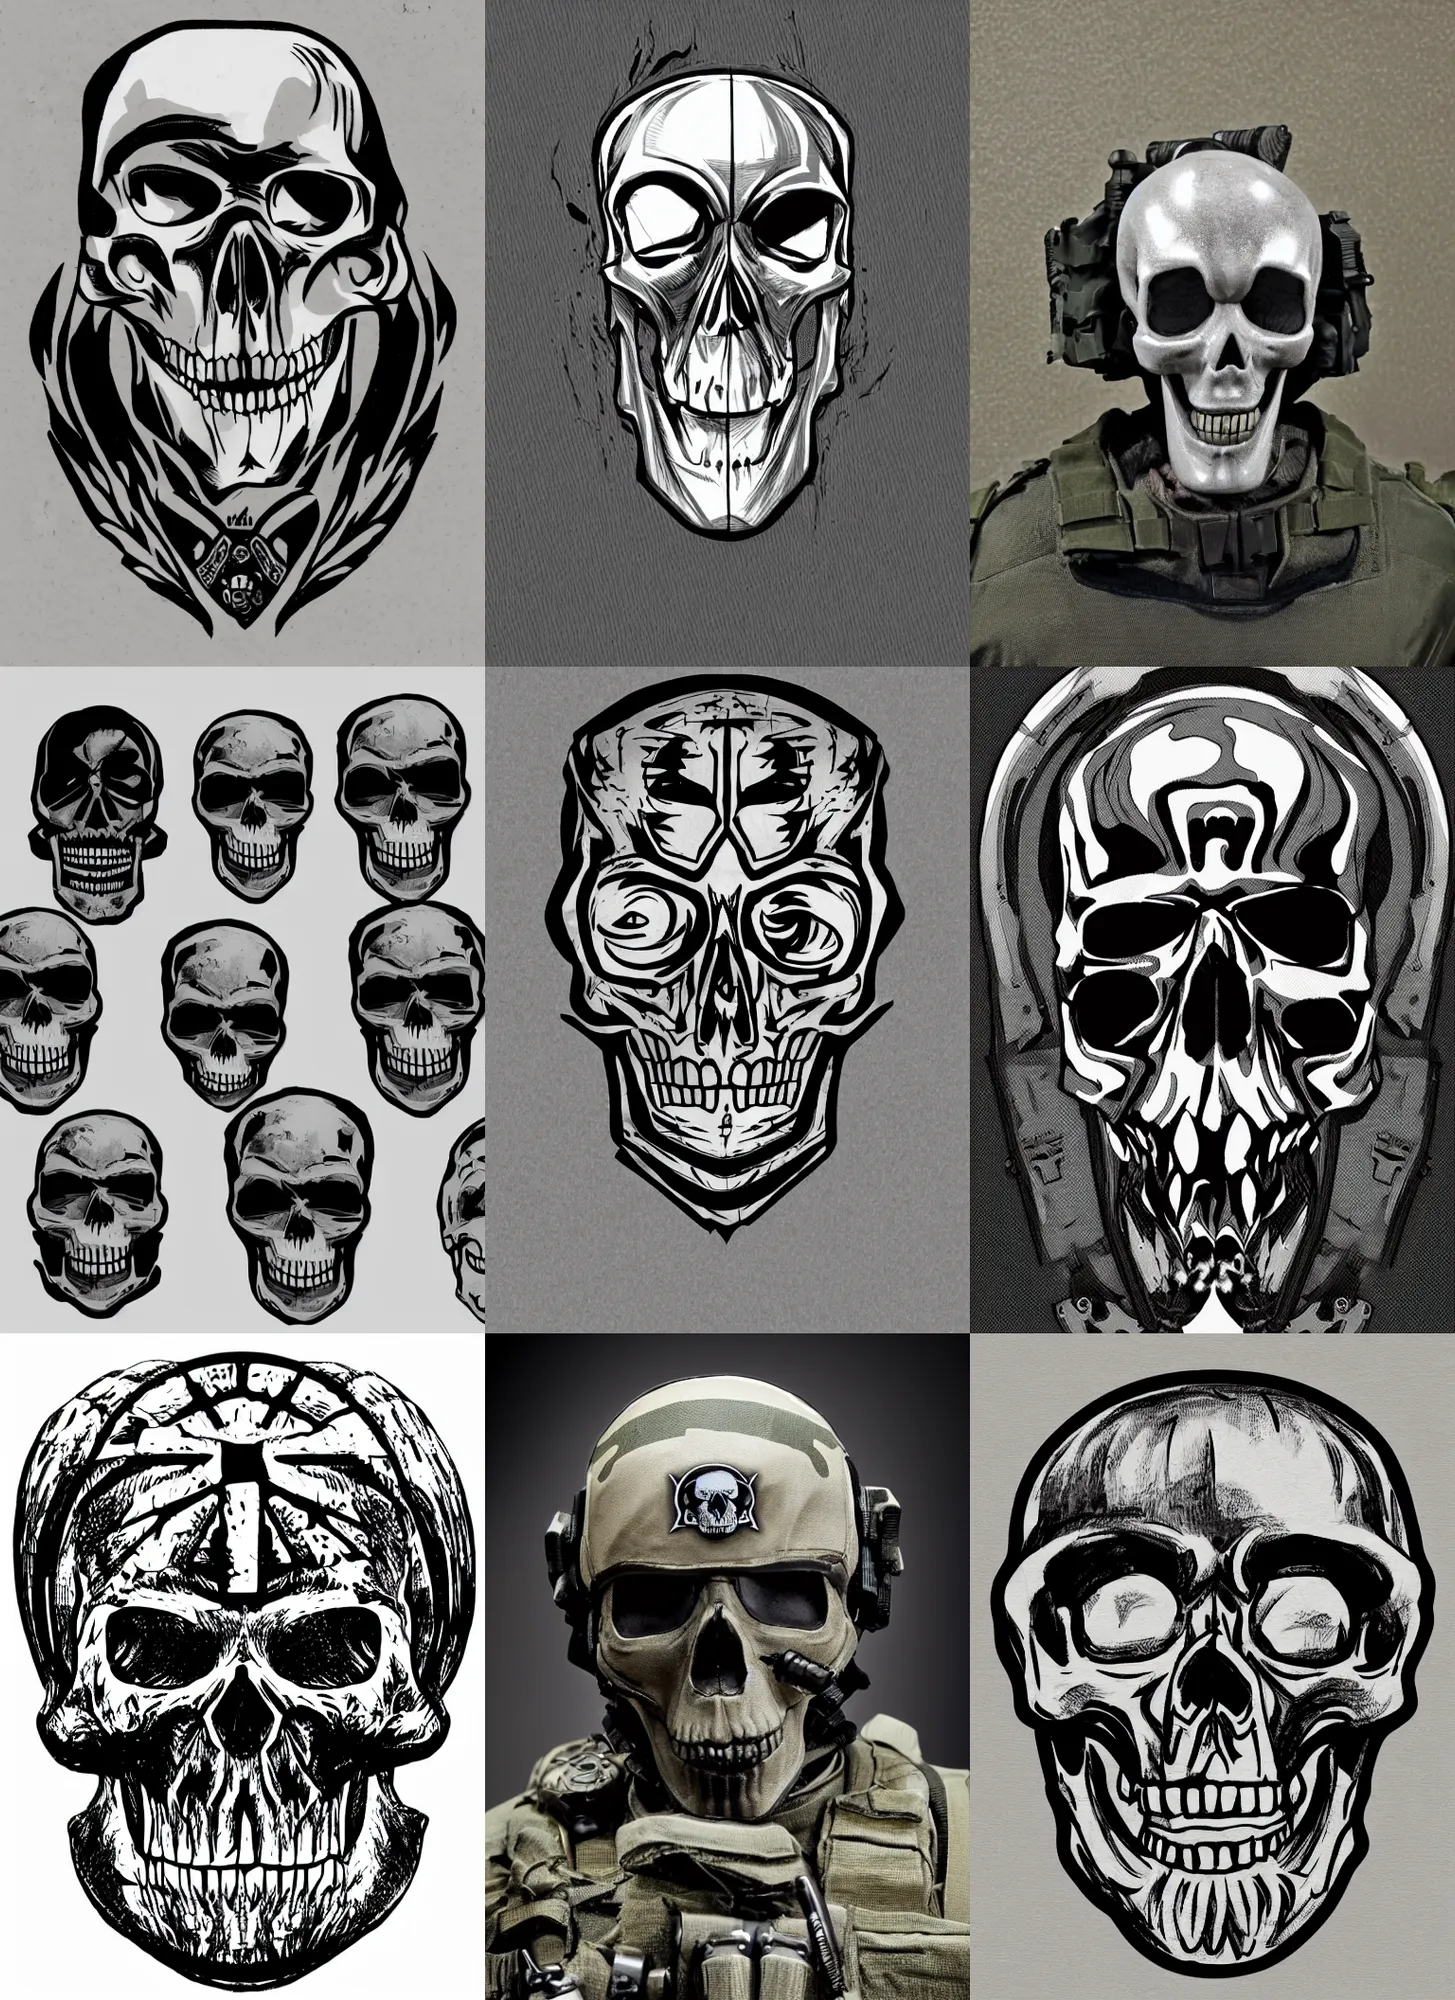 Prompt: spec - ops head, skull pattern on top, special forces, dark design